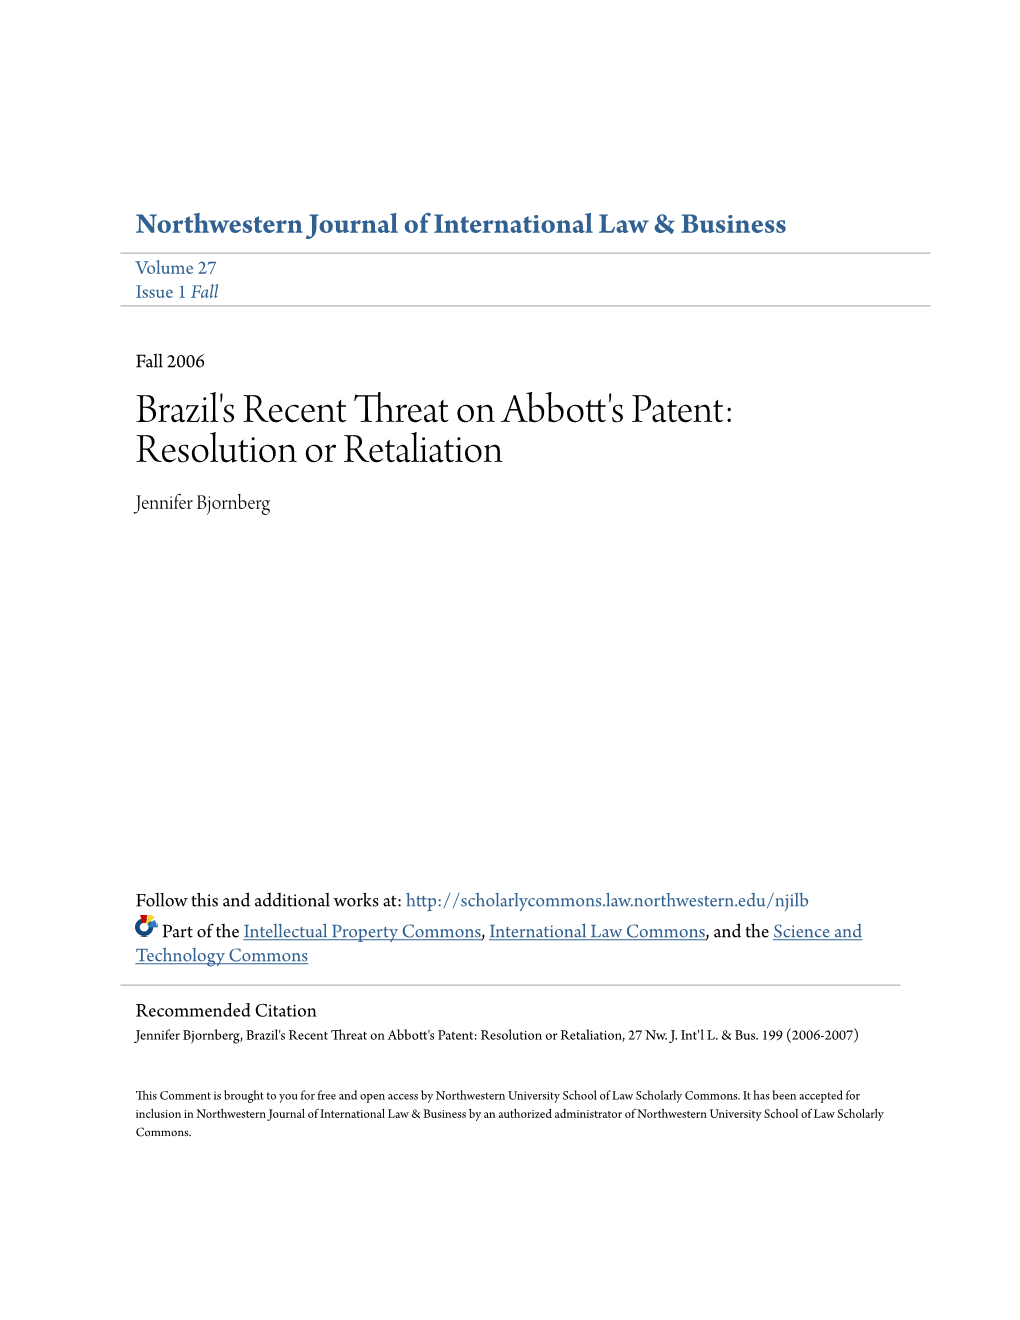 Brazil's Recent Threat on Abbott's Patent: Resolution Or Retaliation Jennifer Bjornberg